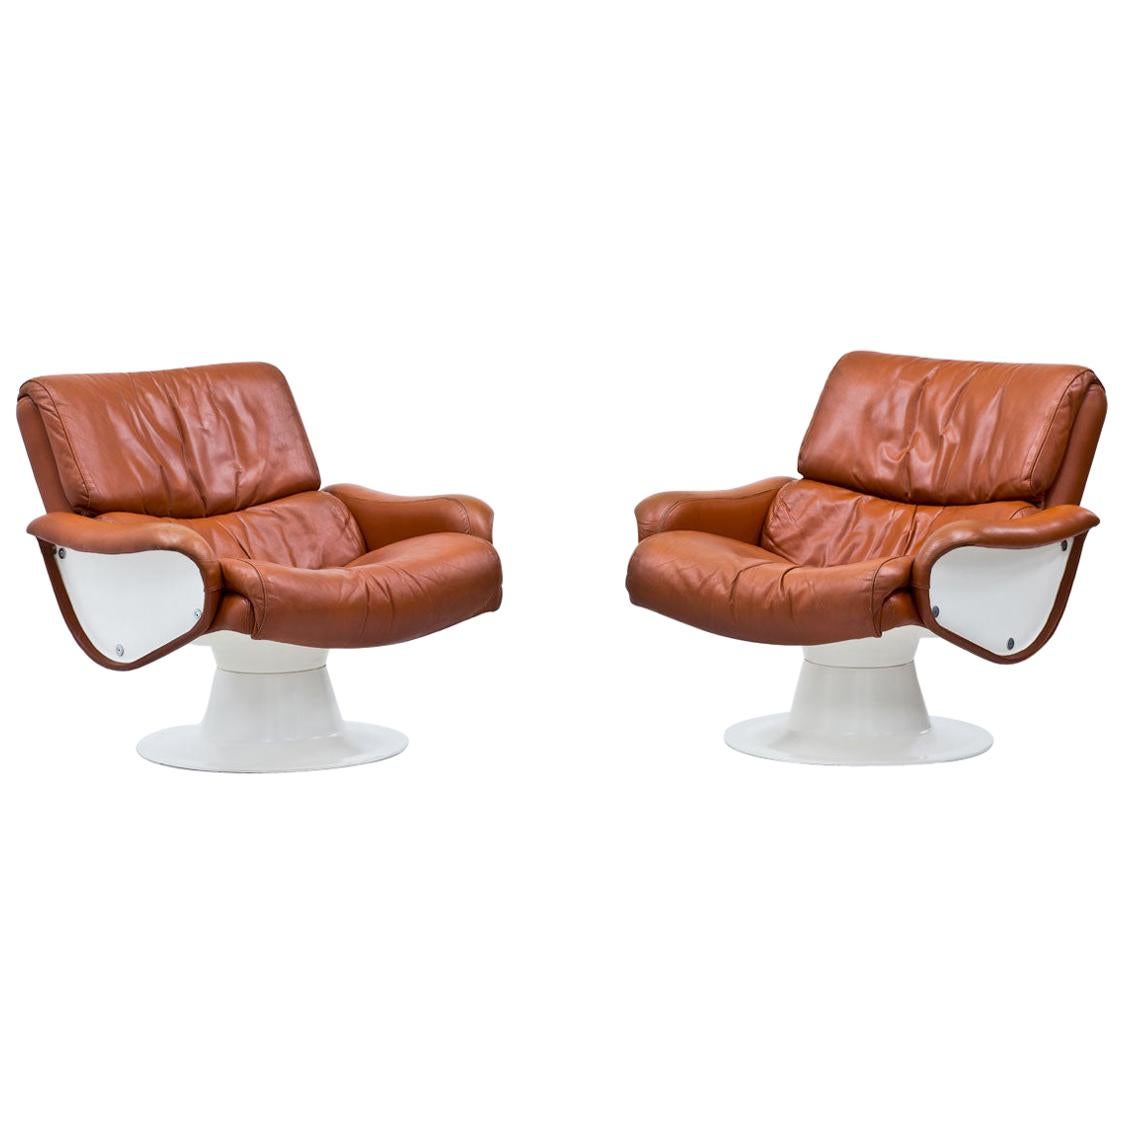 1960s Yrjö Kukkapuro "Saturnus" Lounge Chairs